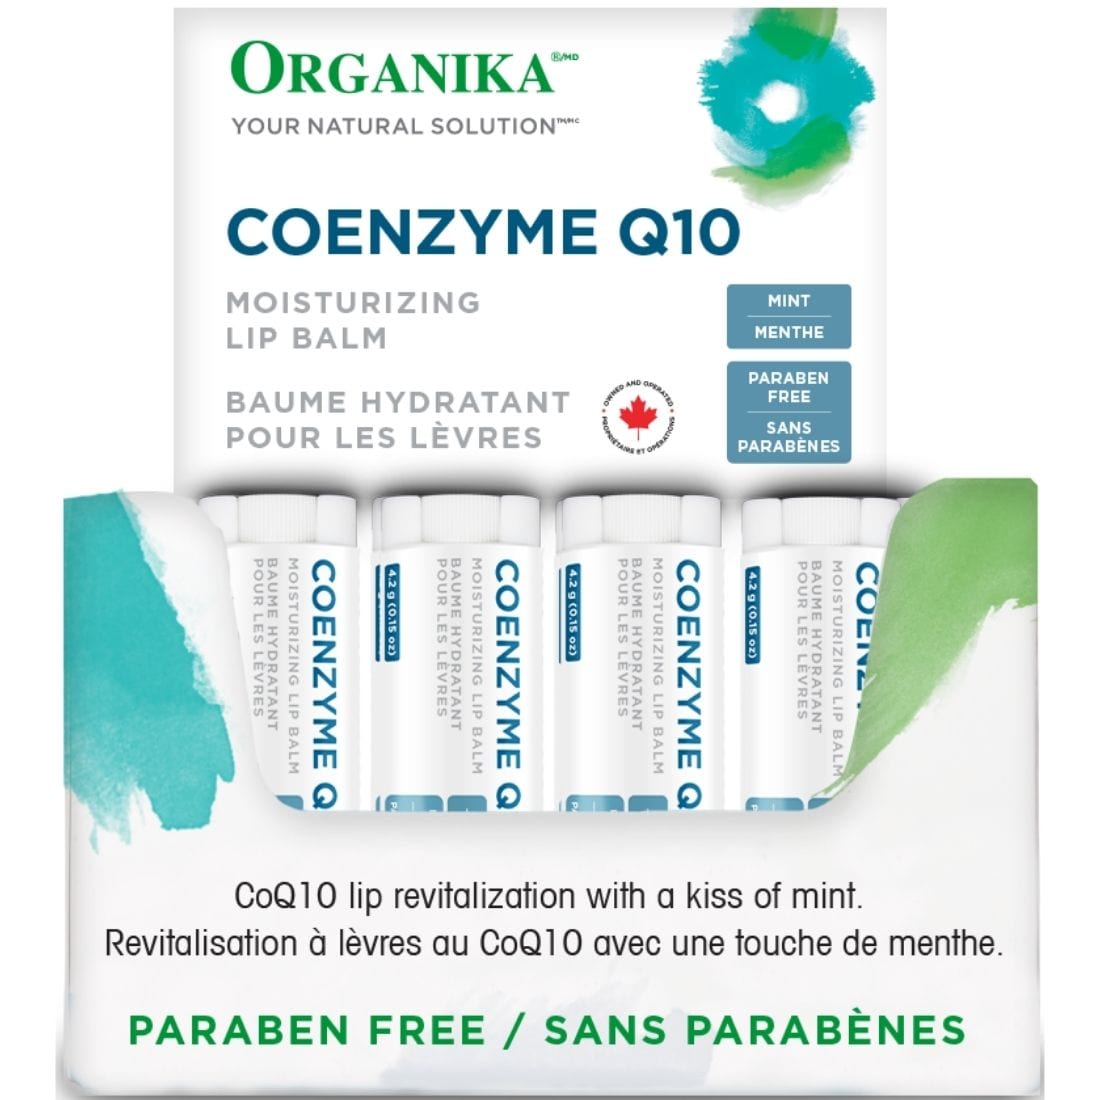 Organika Coenzyme Q10, Moisturizing Lip Balm, 4.2g Single Tube